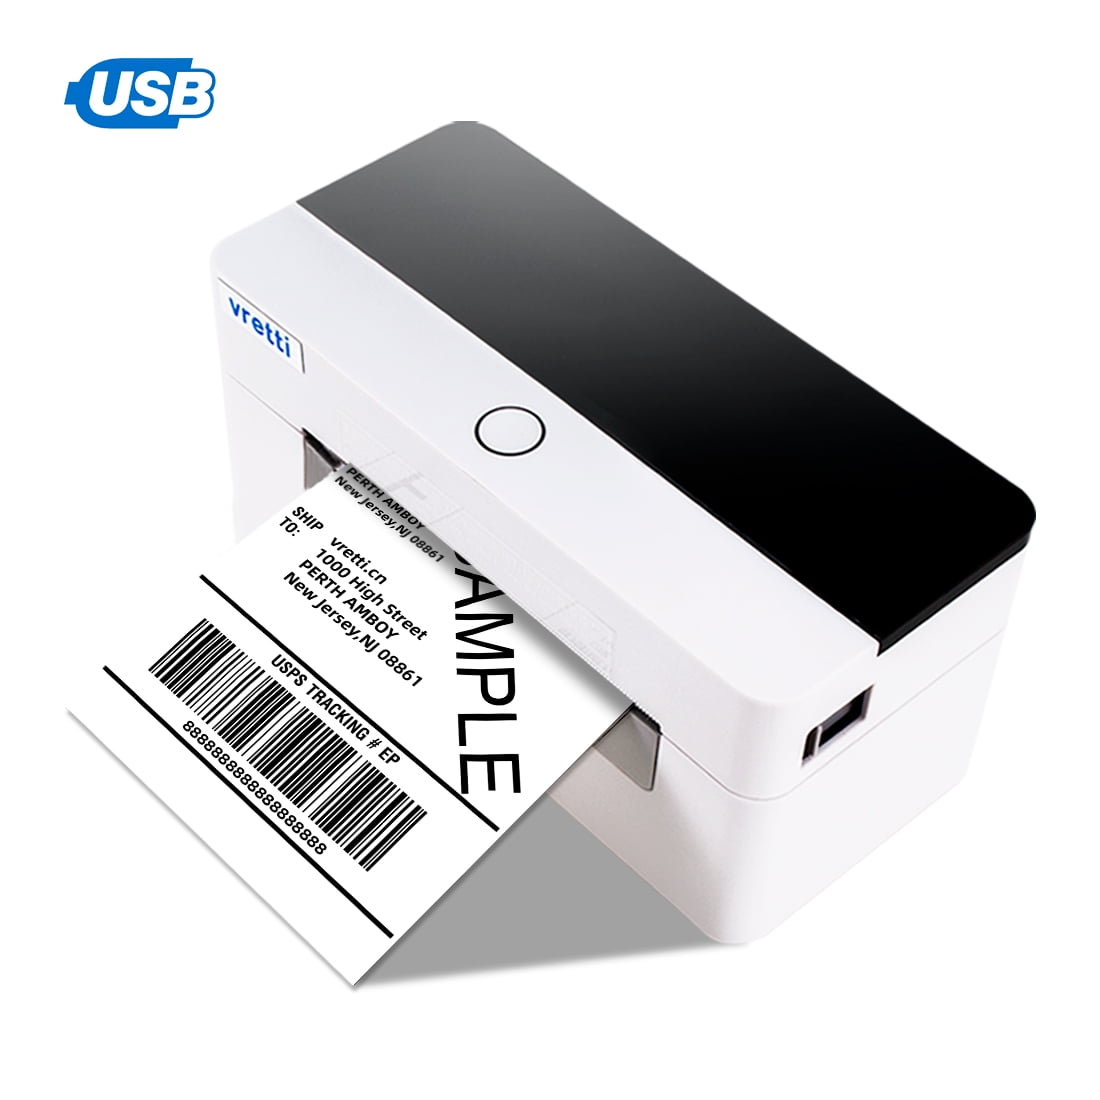 VRETTI USB Shipping Label Printer,Barcode Label for Small Business Windows/MAC. -